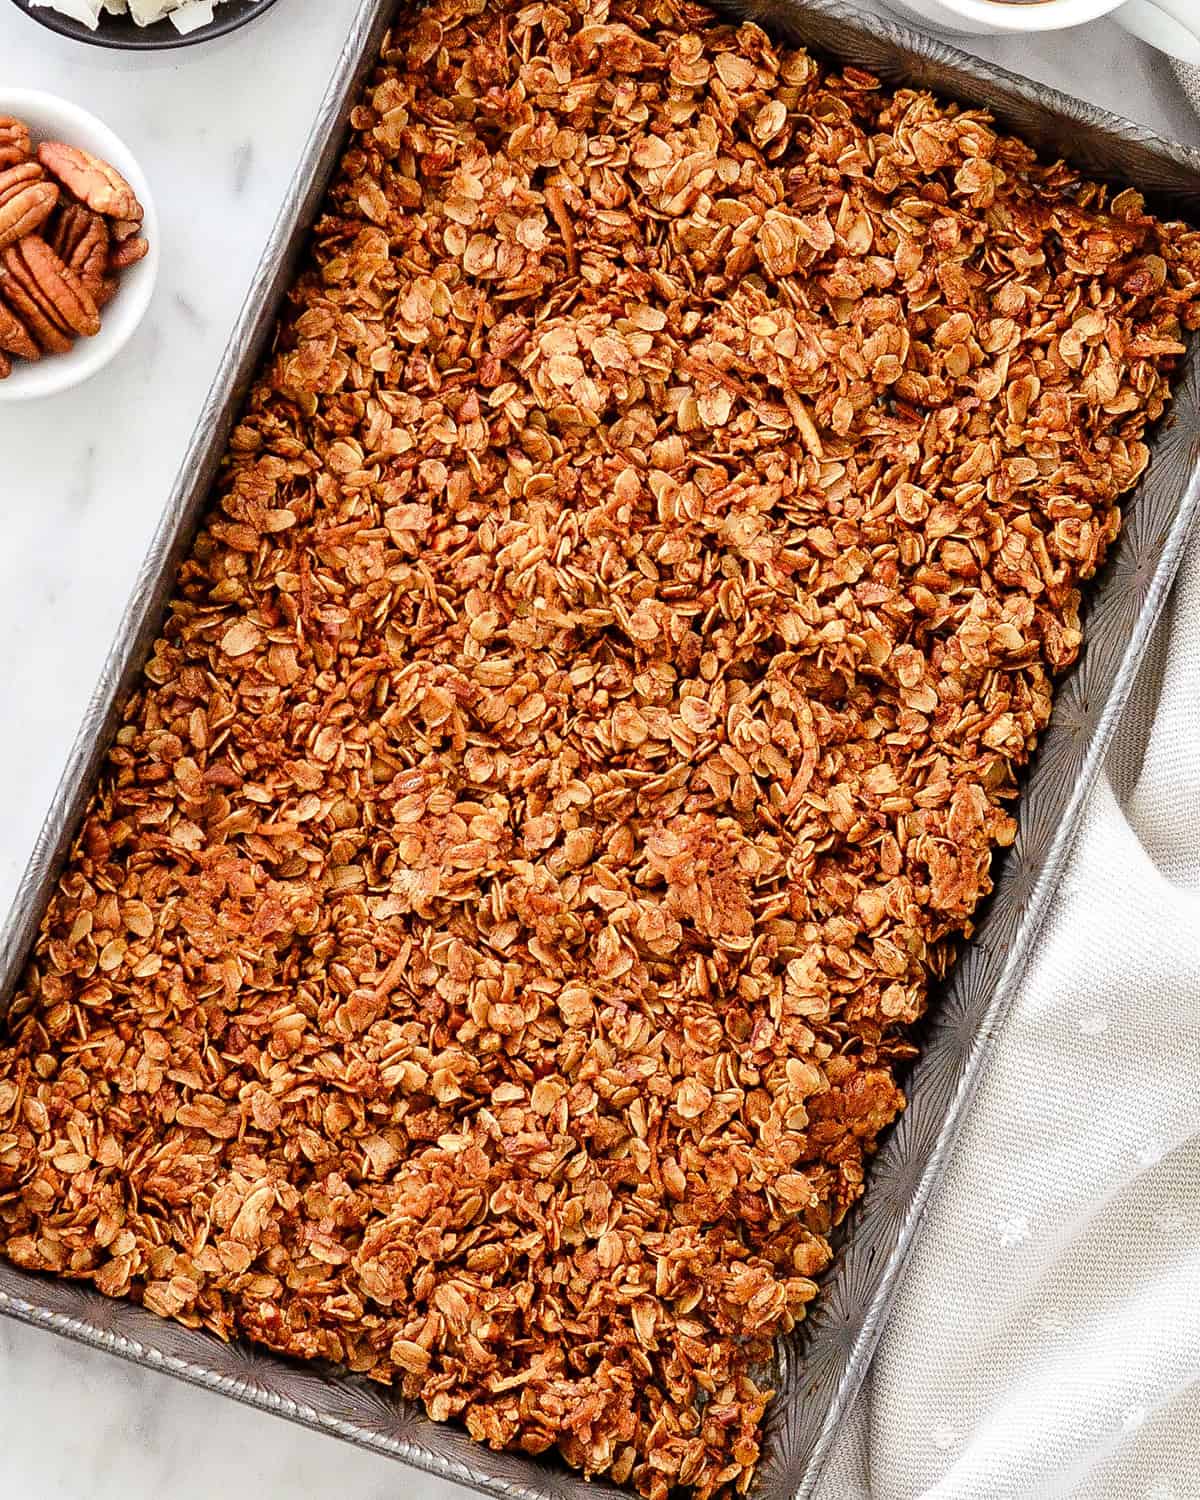 How to Make Homemade Granola - baked granola in a baking sheet